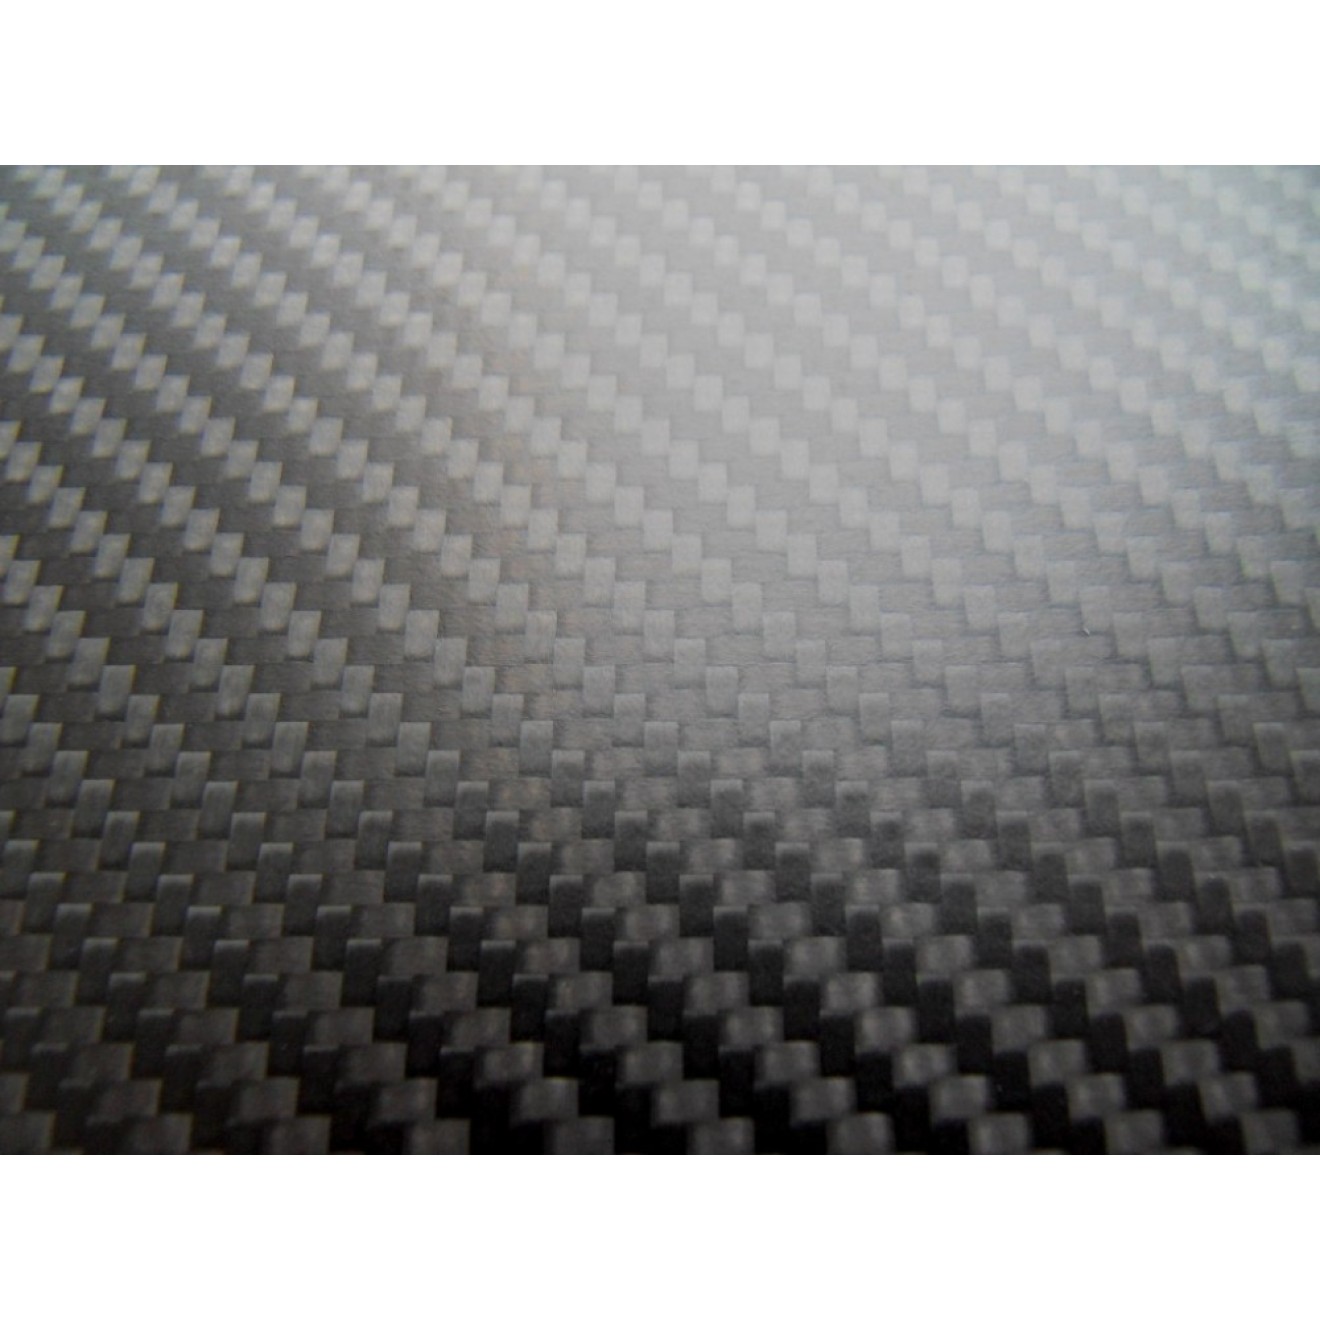 Xellentic® CF 1220x970mm, surface matt finish